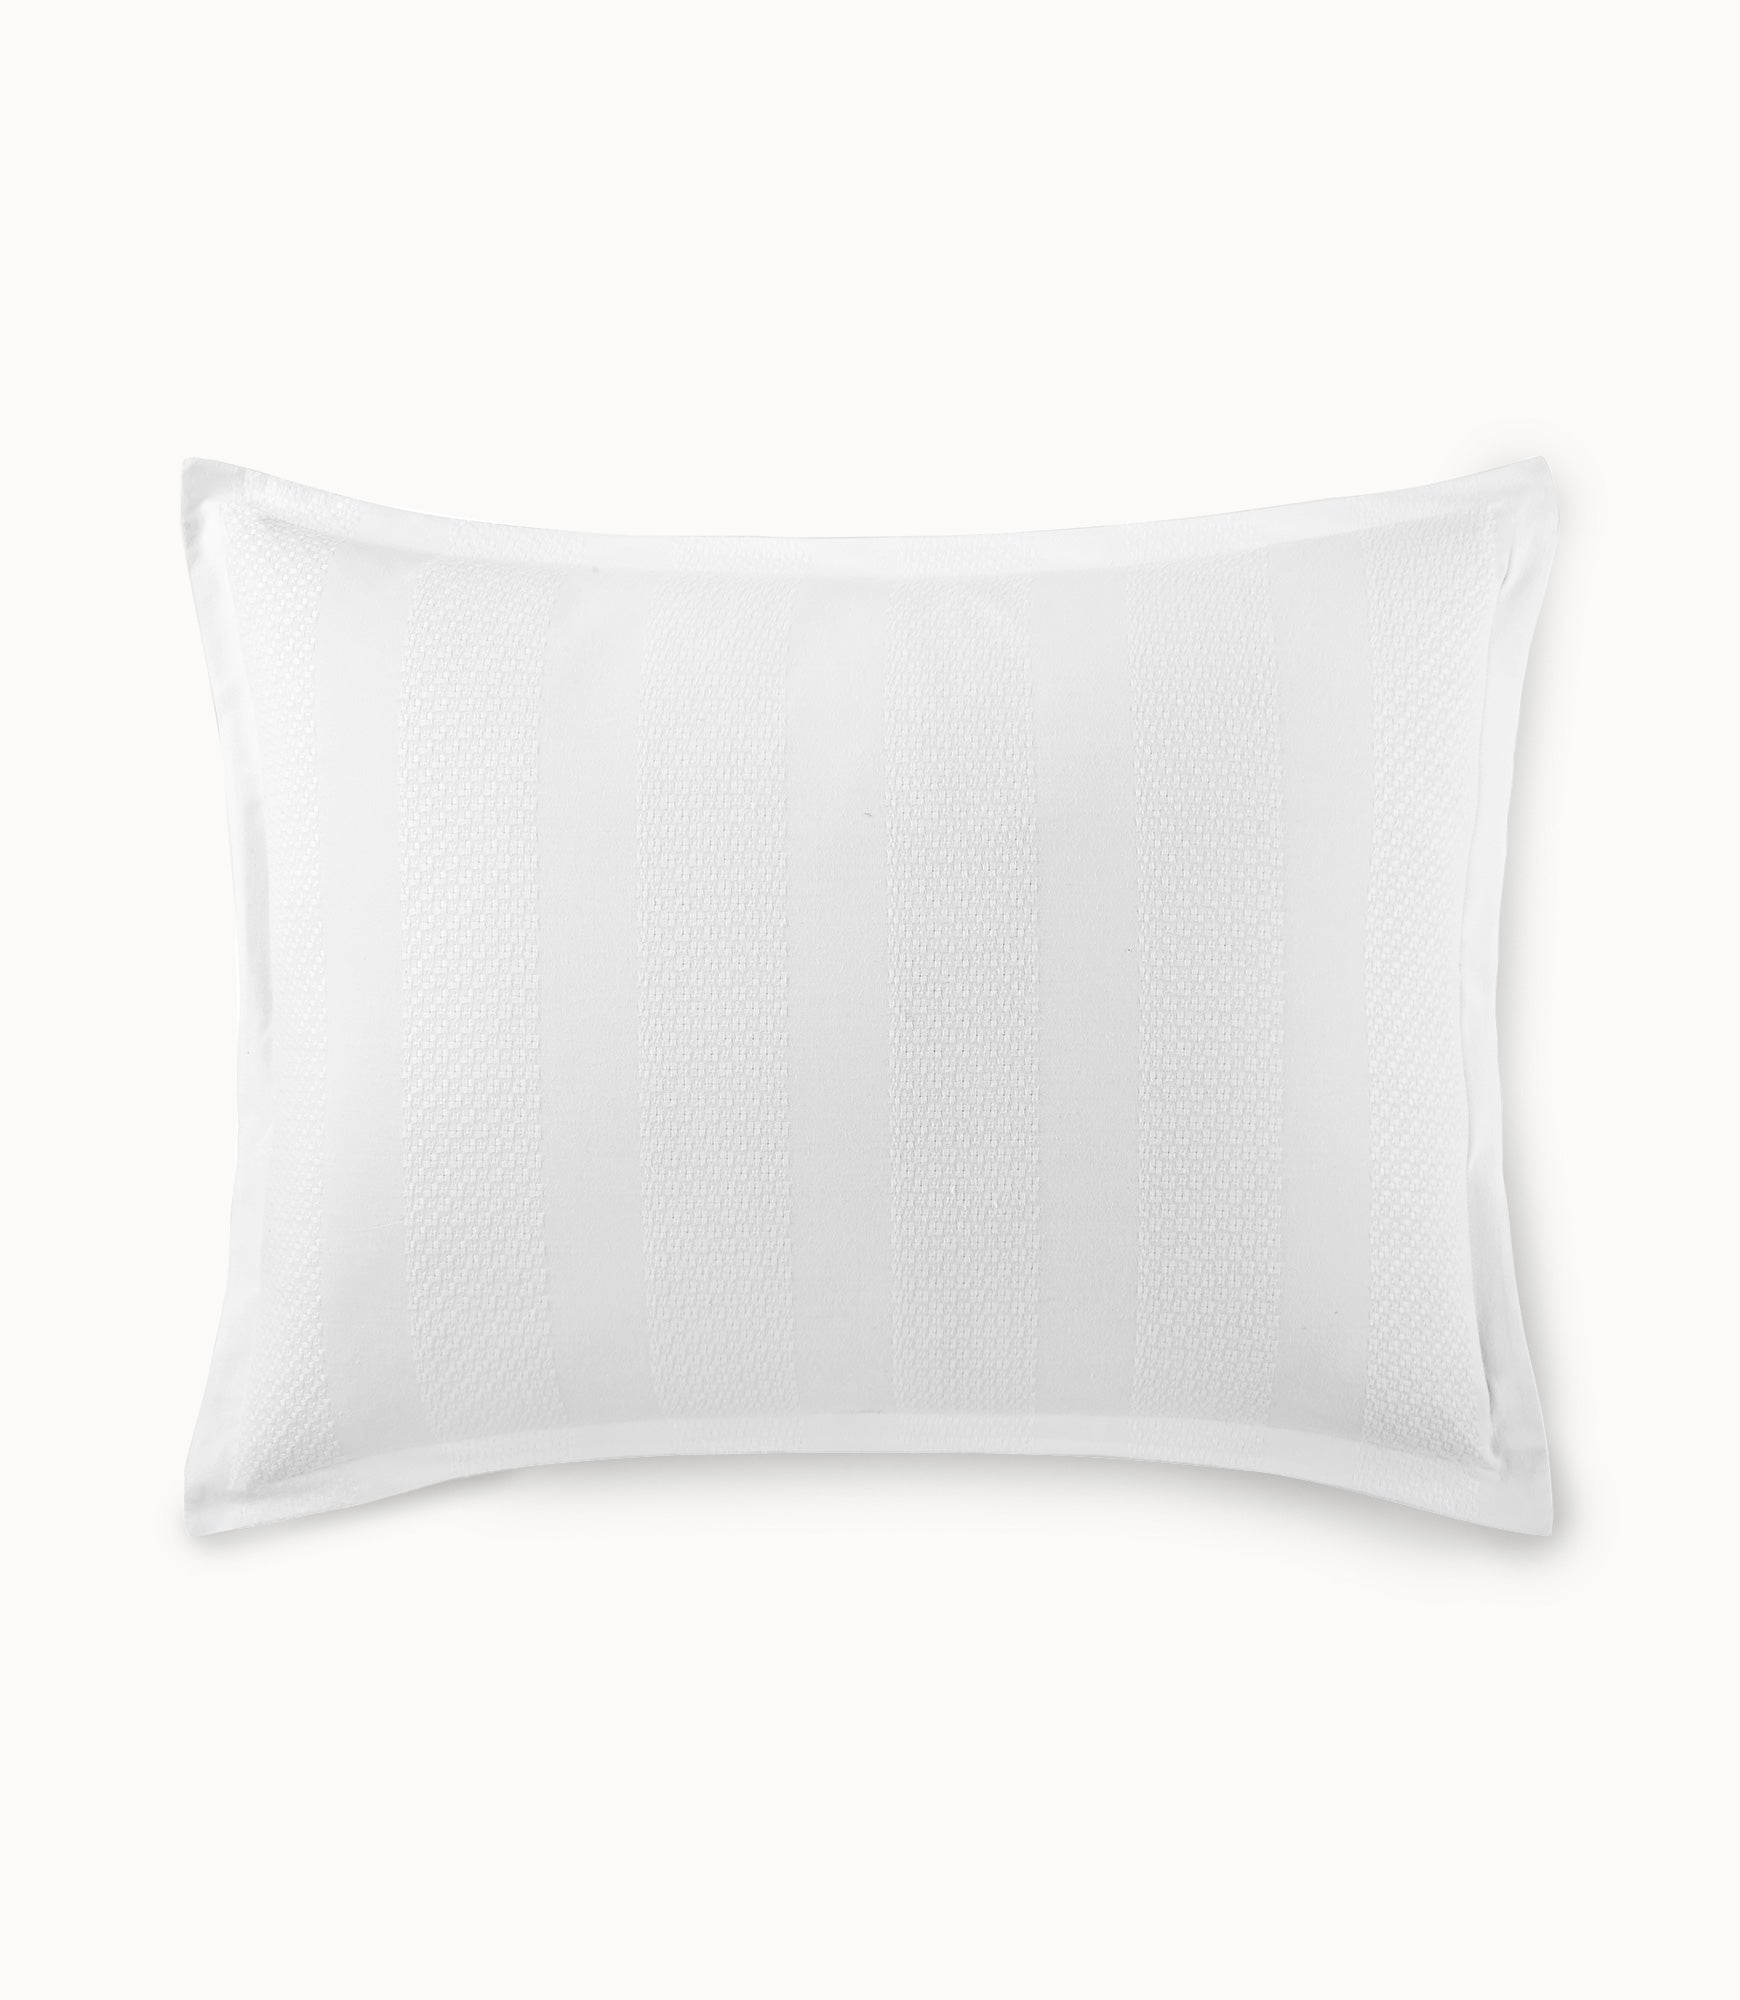 Channing White textured striped pillow sham